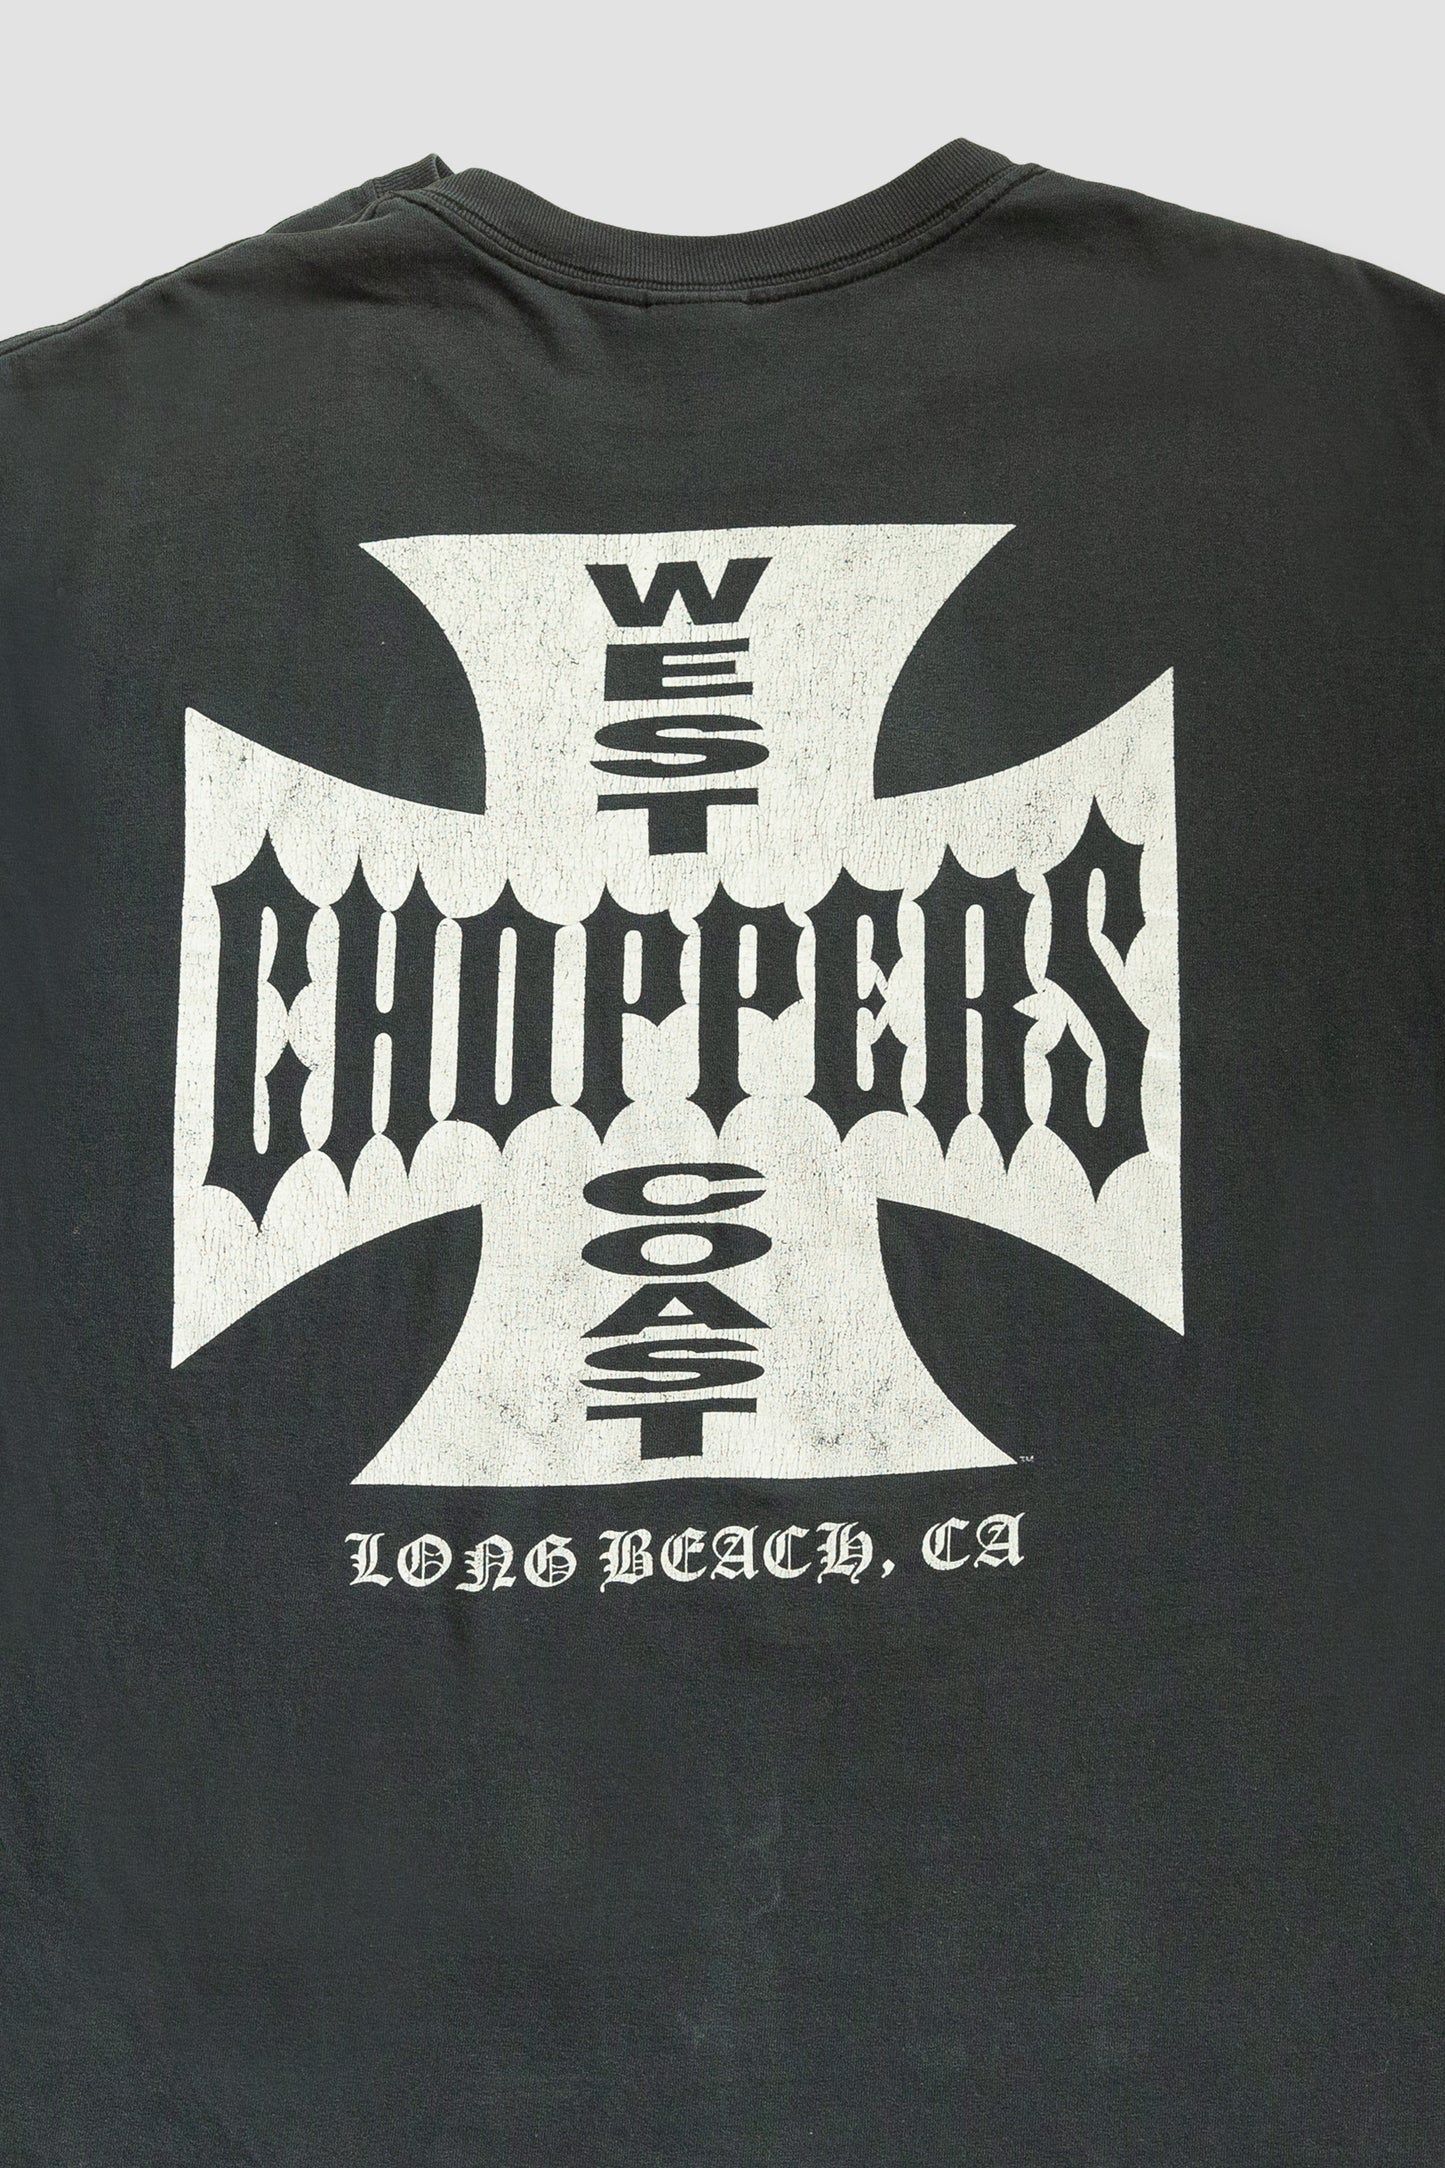 West Coast Choppers Tee